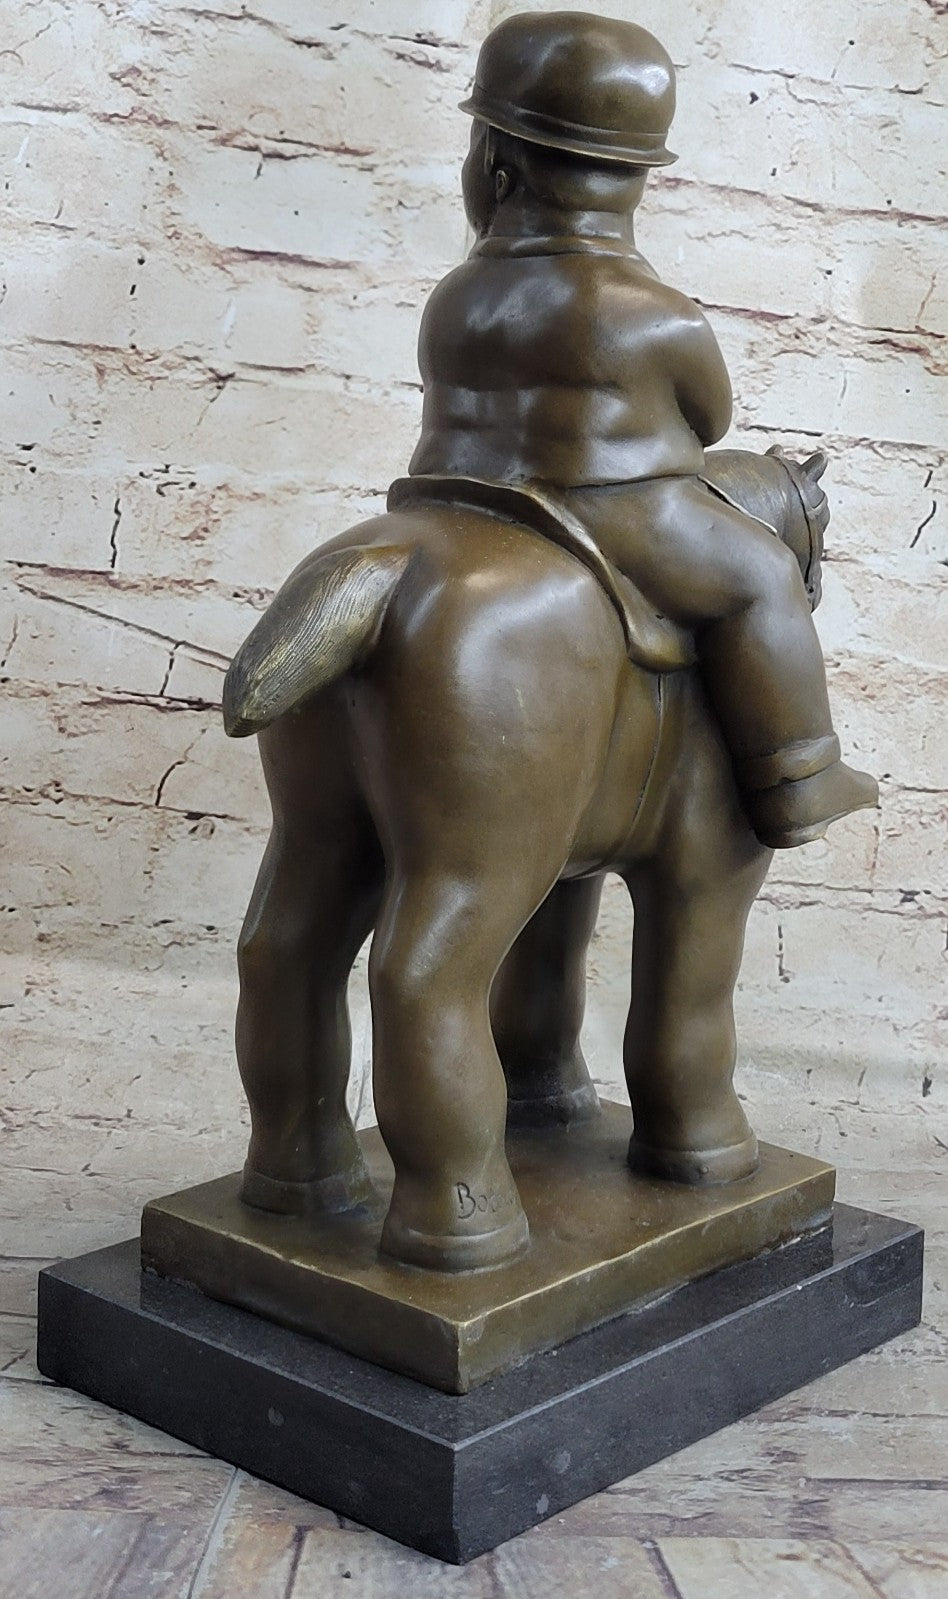 Bronze Sculpture Chubby Man on Horse Figure Signed Botero Sculpture Figurine Art